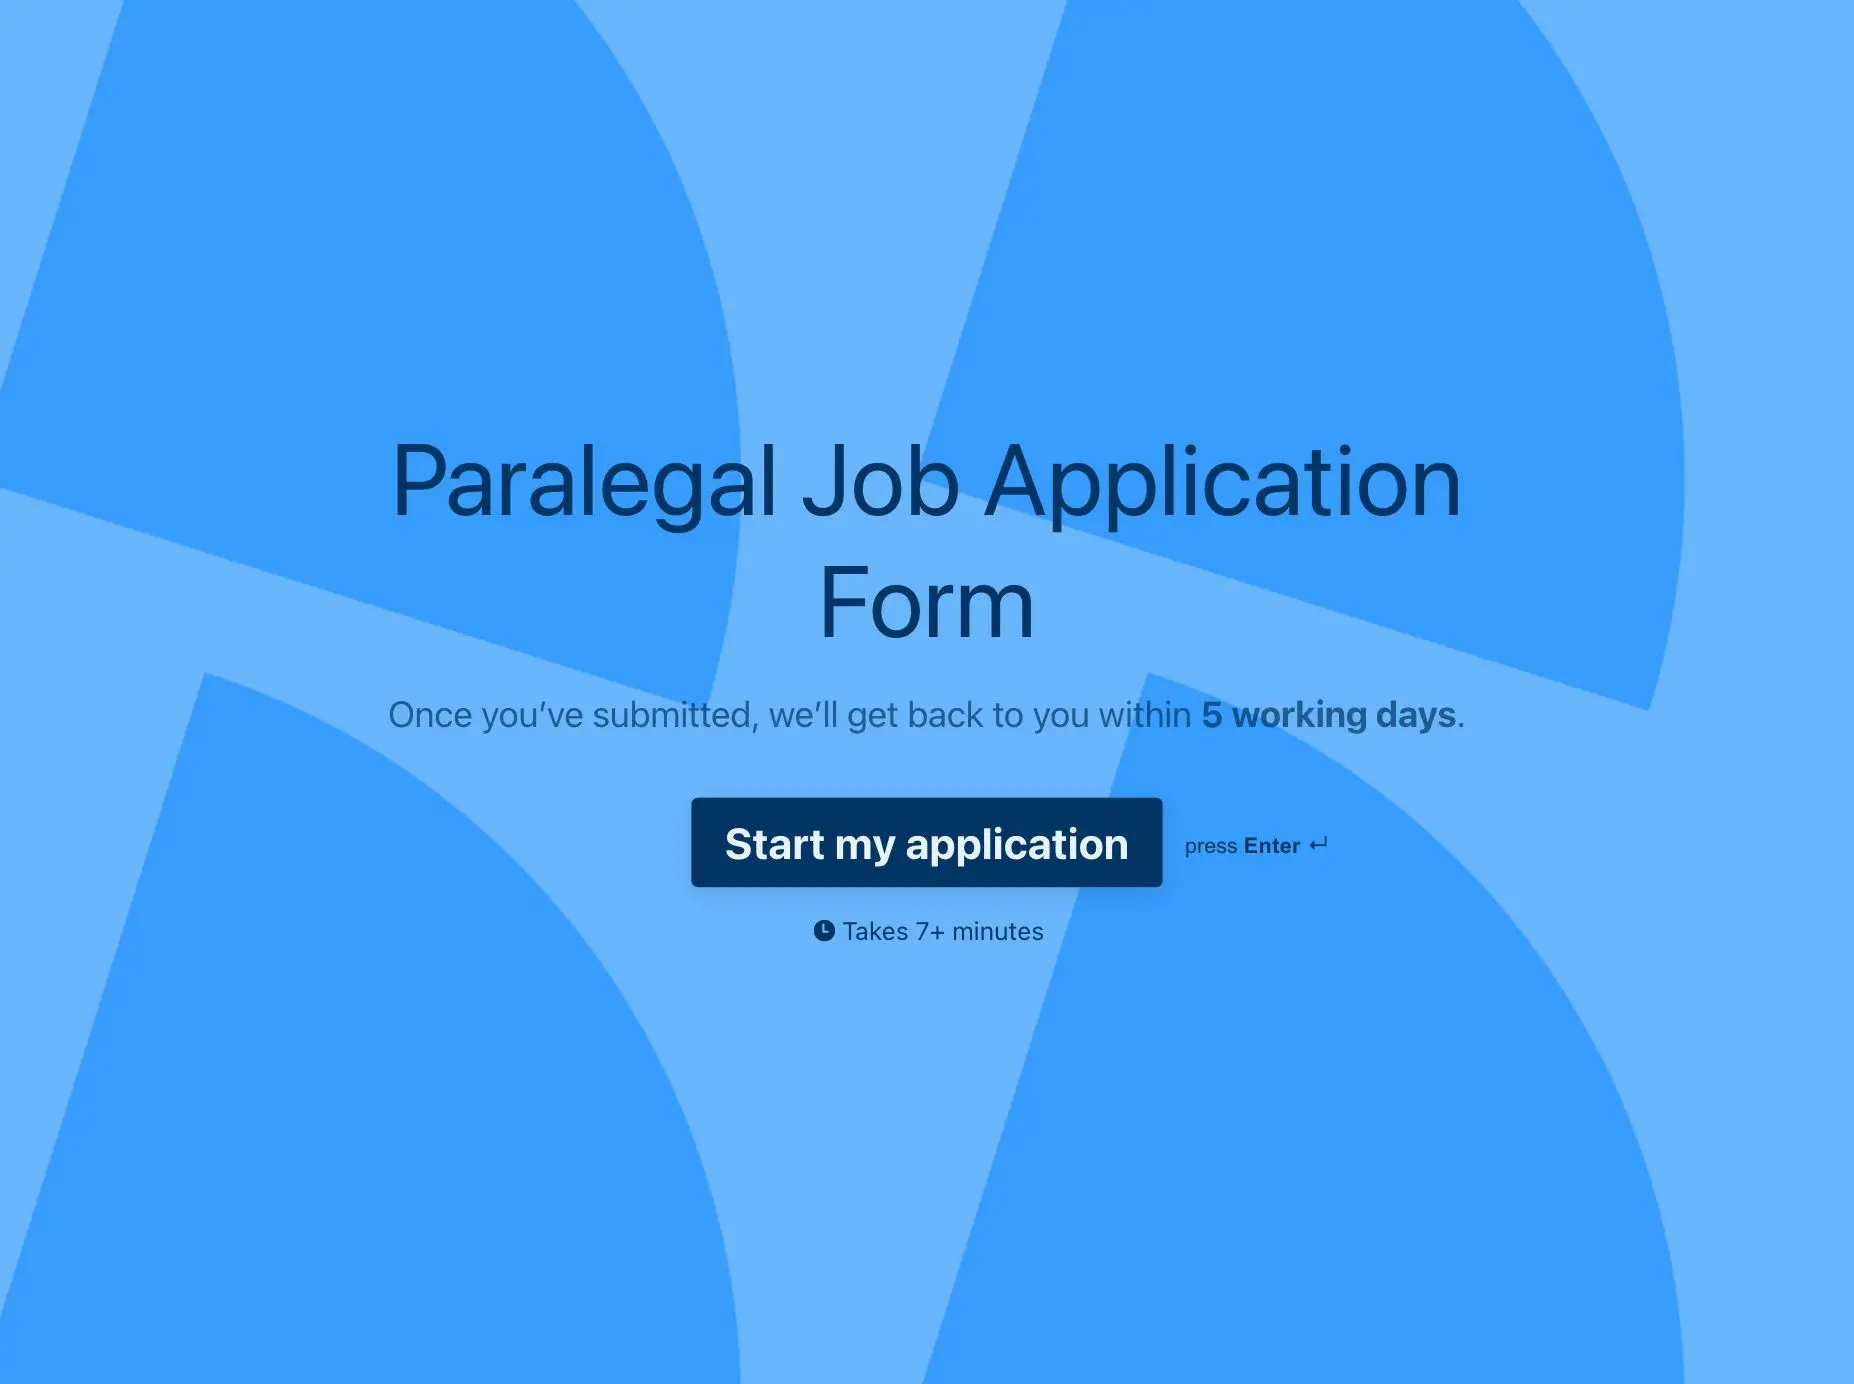 Paralegal Job Application Form Template Hero